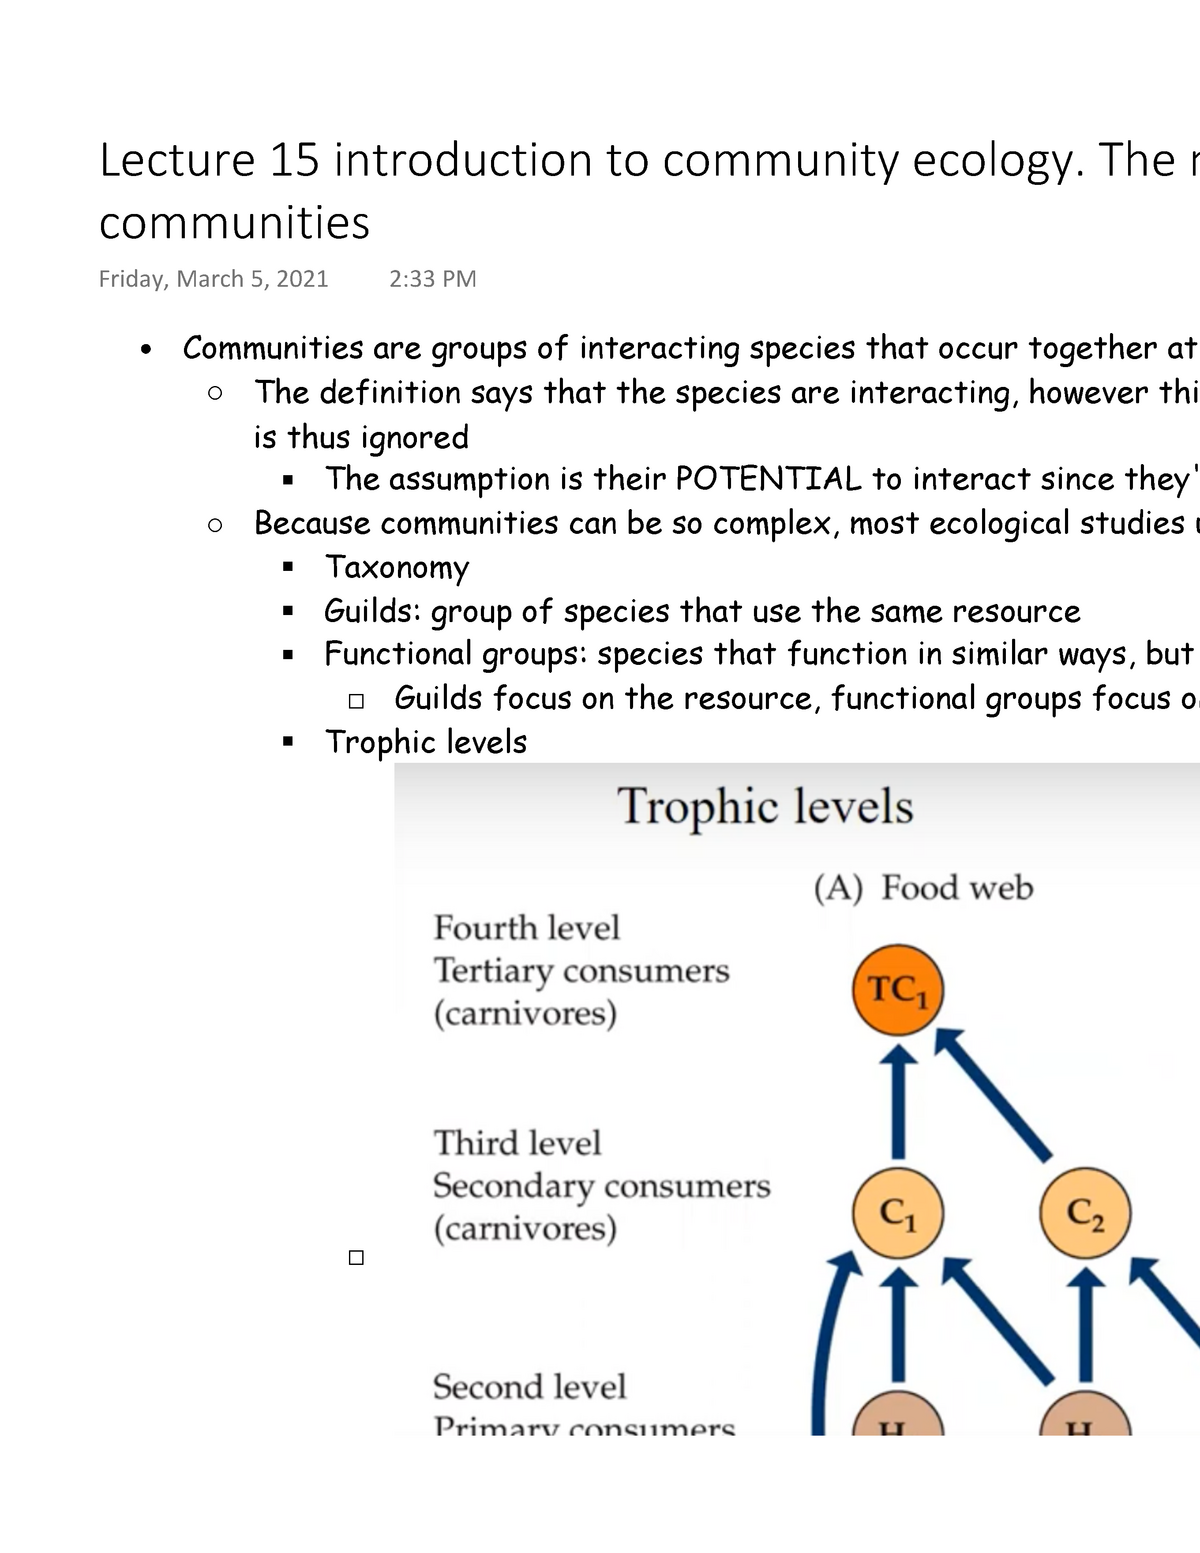 write an essay on the meta community ecology framework